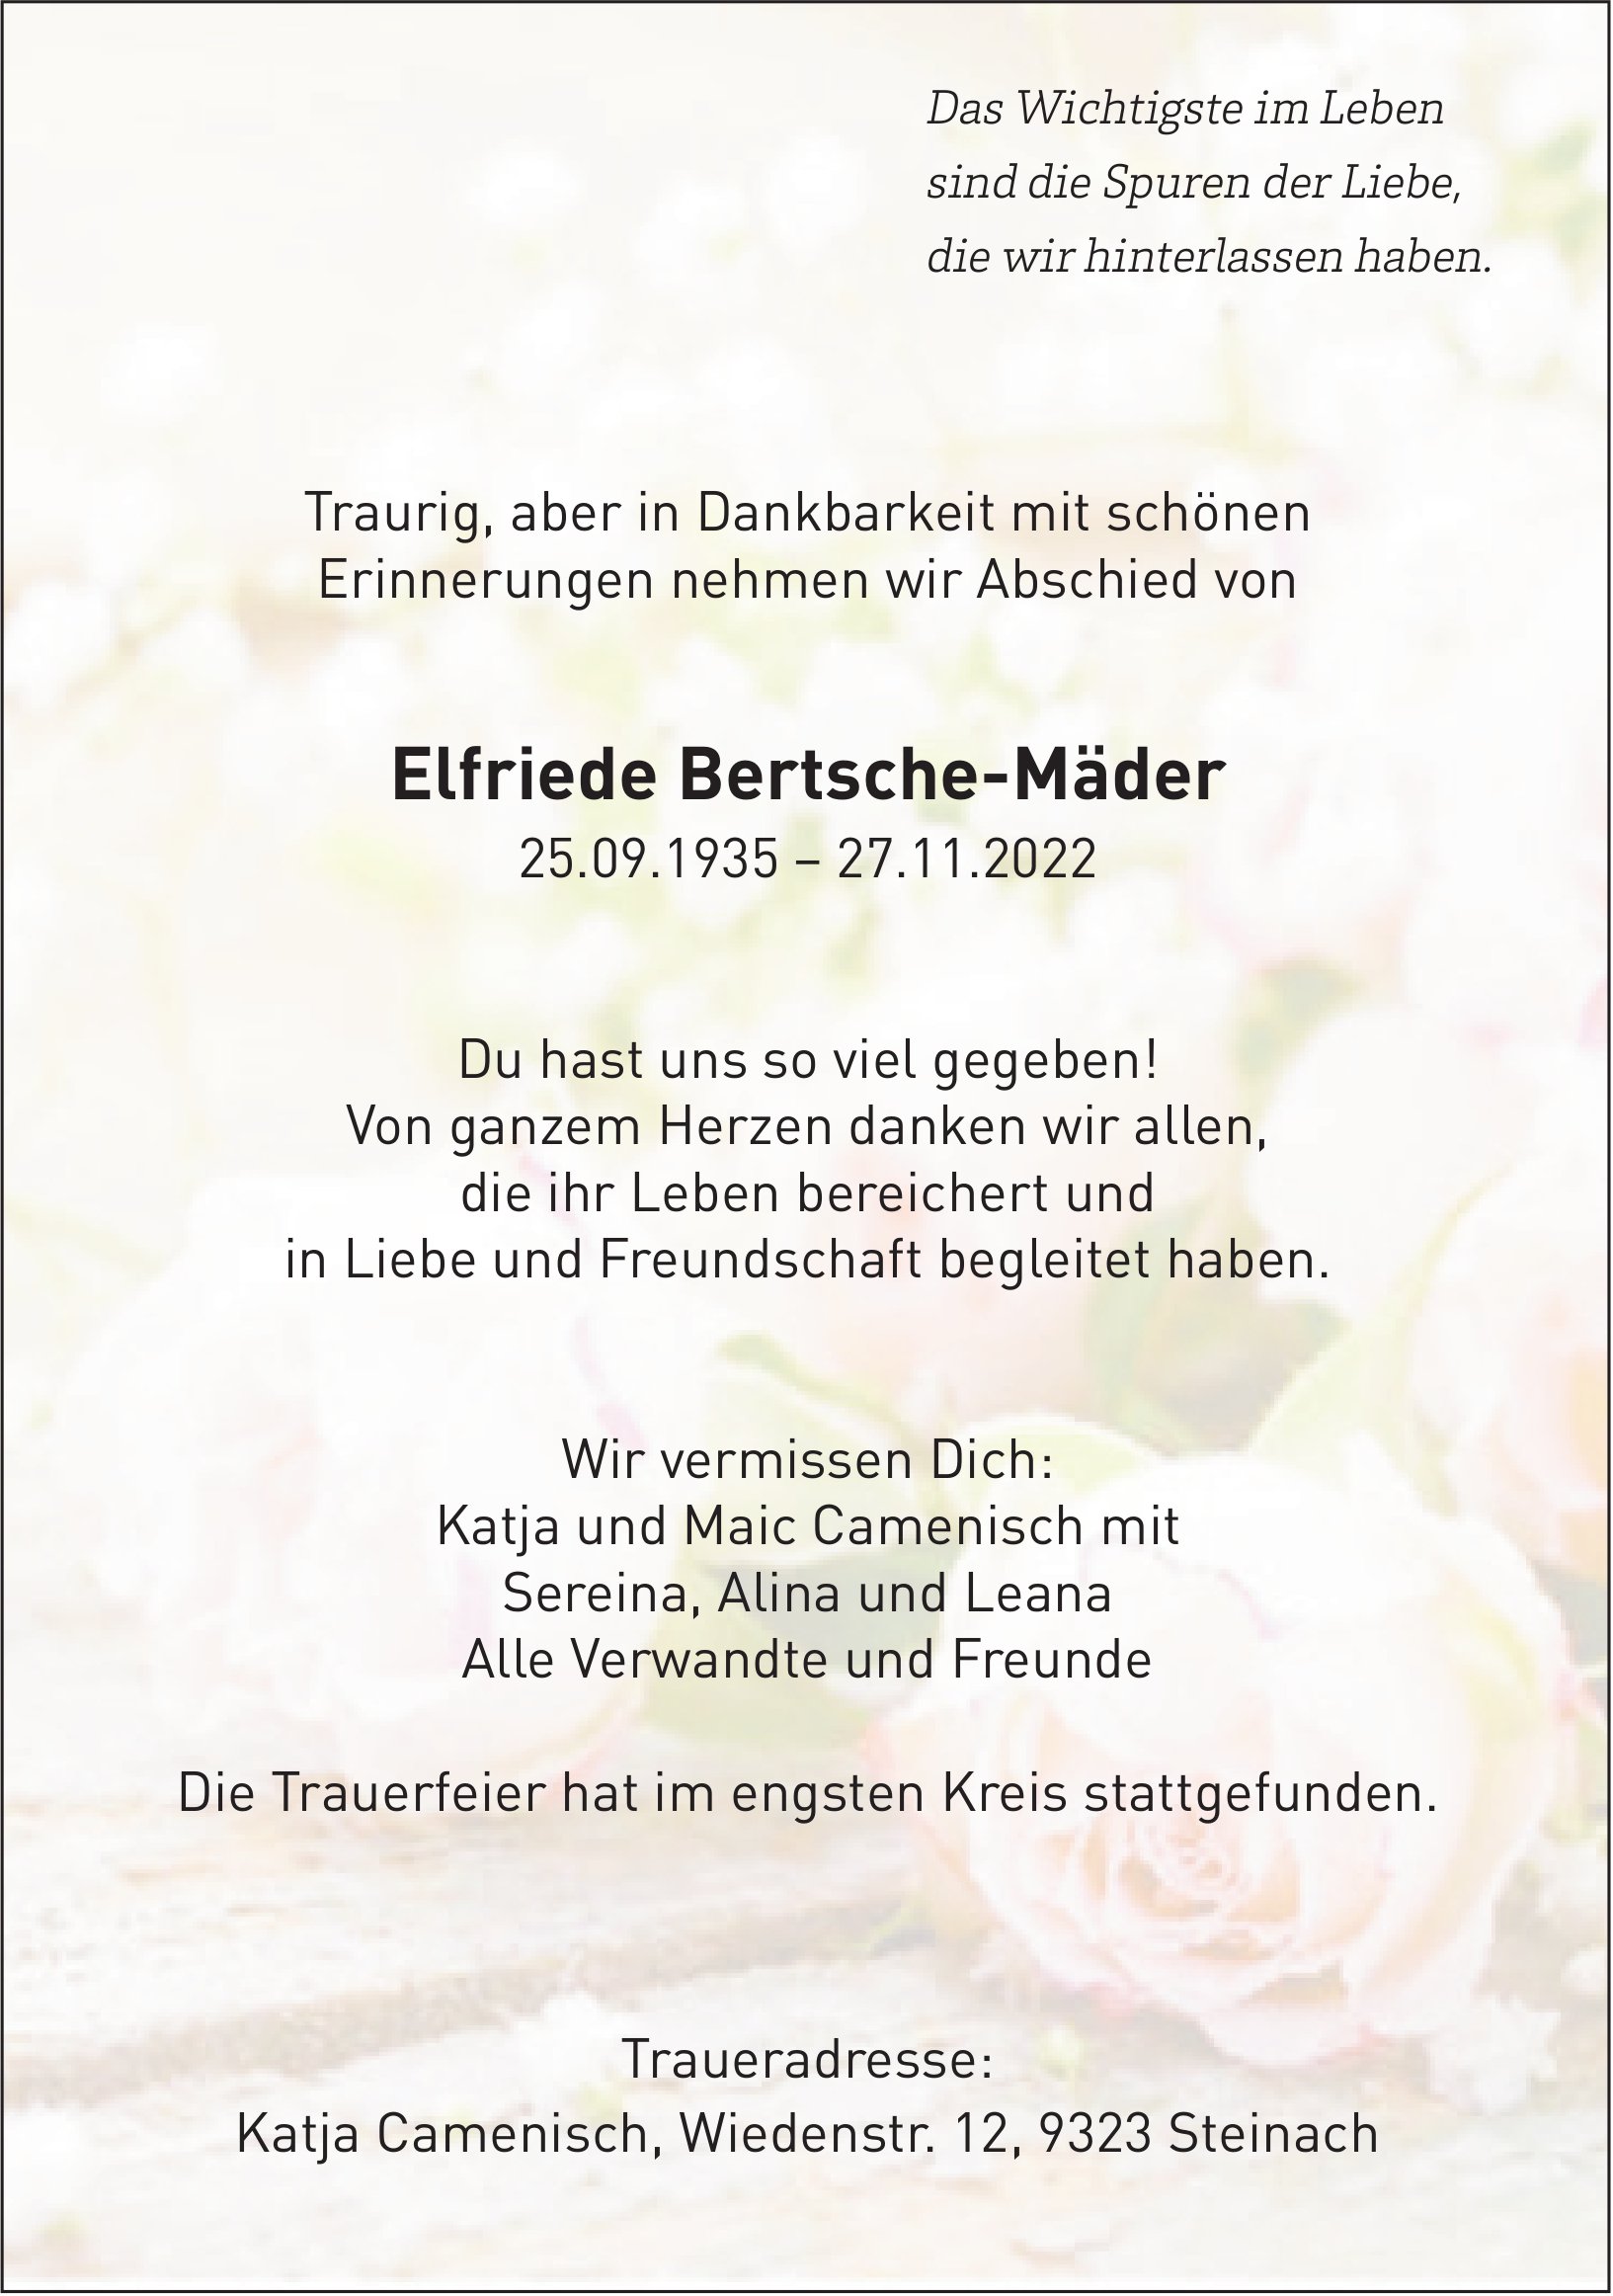 Elfriede Bertsche-Mäder, November 2022 / TA